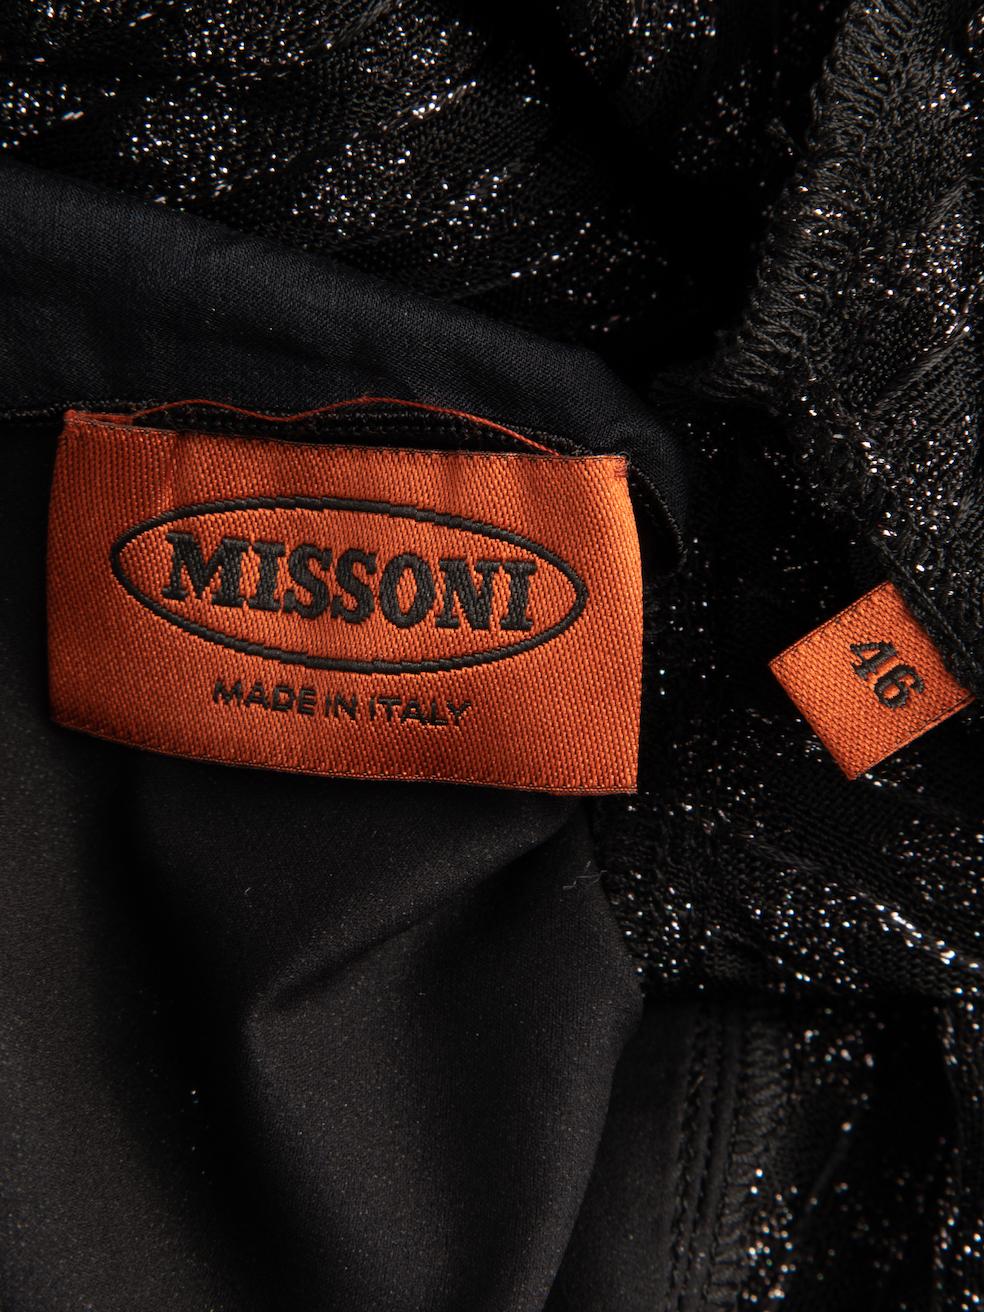 Pre-Loved Missoni Women's Black Mesh Neckline Metallic Houndstooth Top For Sale 2